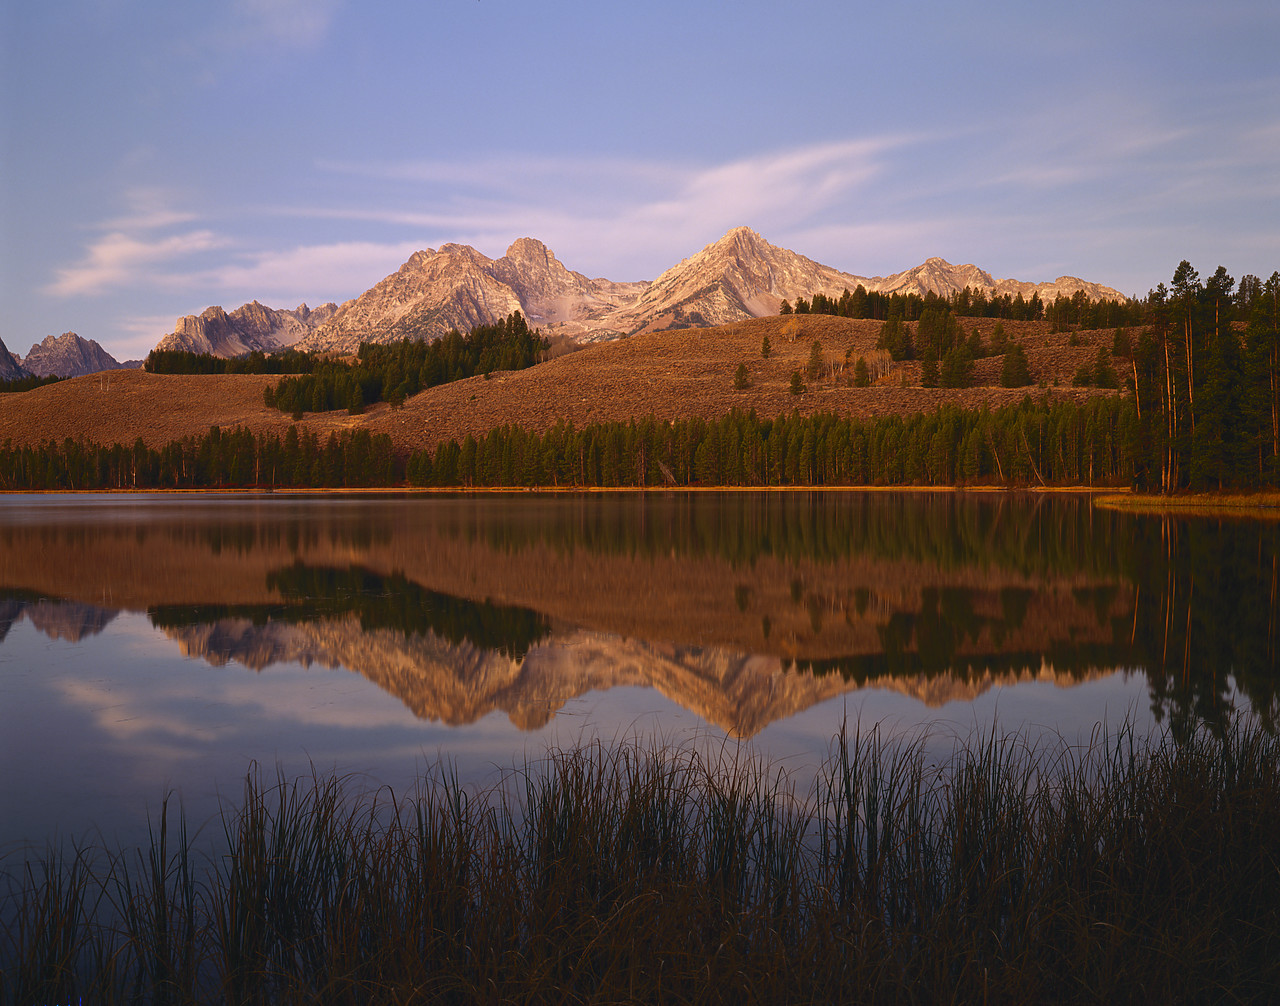 #913831-1 - Sawtooth Mountains Reflecting in Little Redfish Lake, Idaho, USA